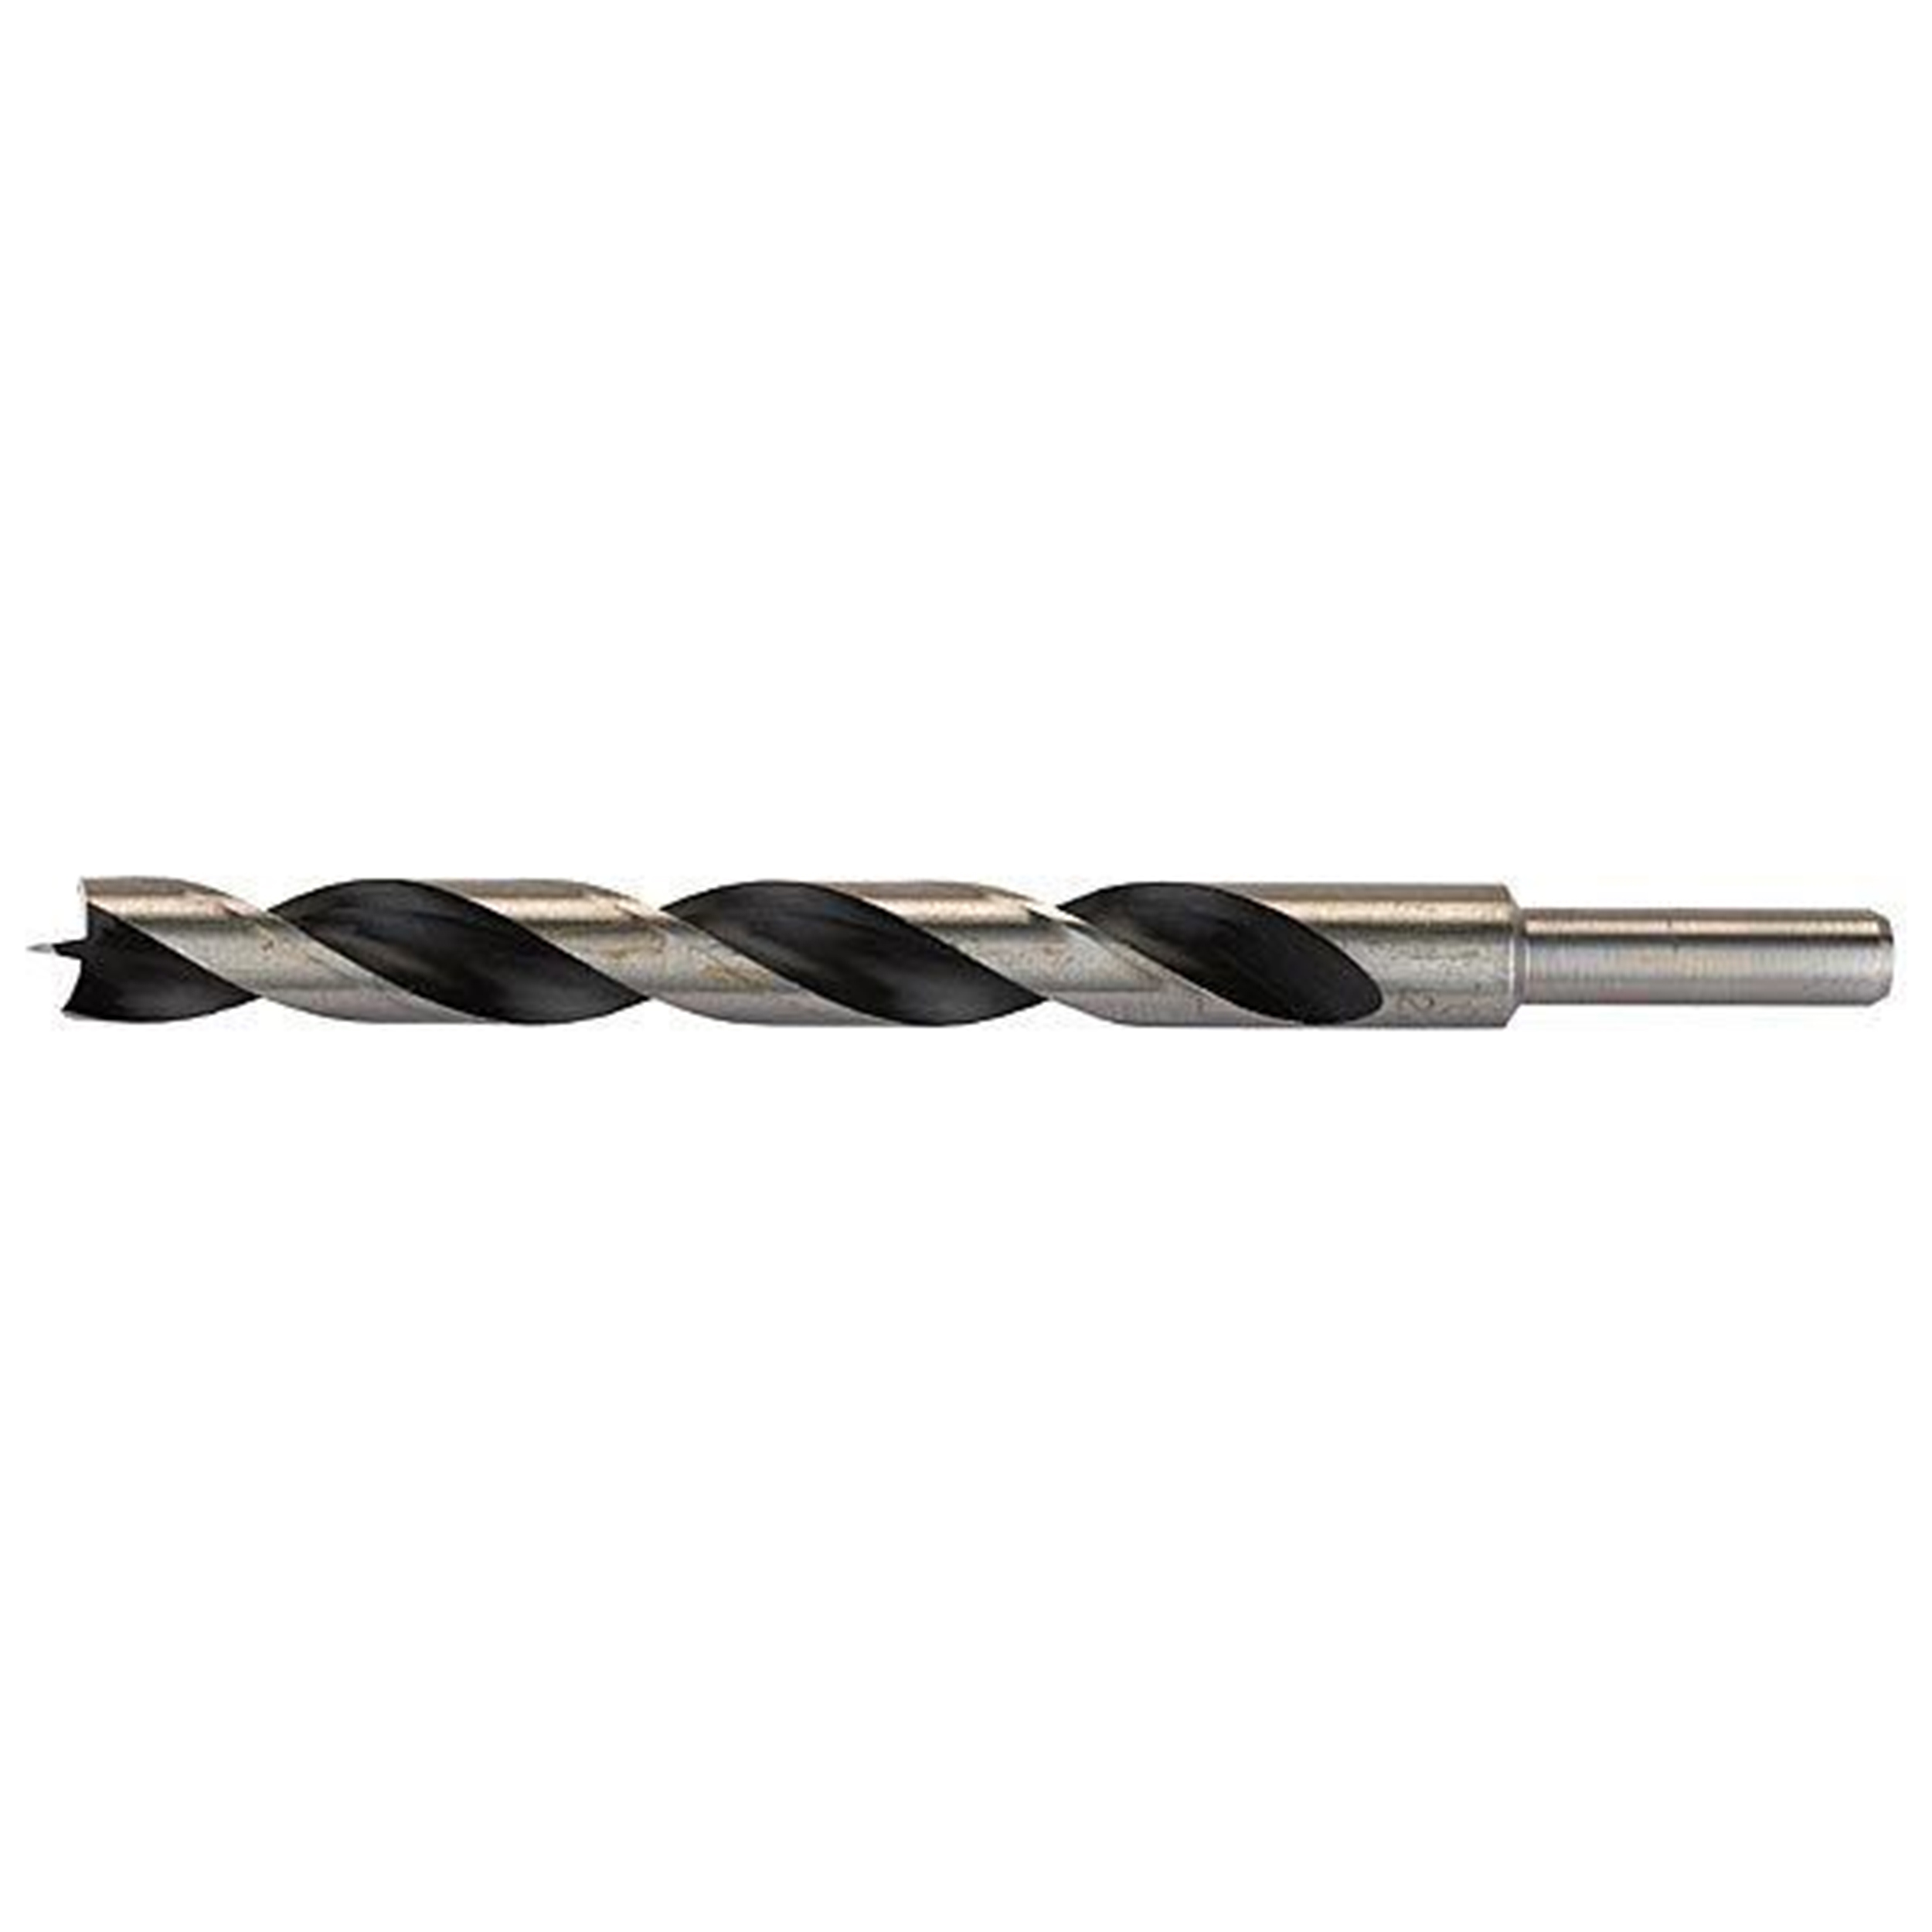 12mm Chrome-vanadium Steel Brad Point Drill Bit